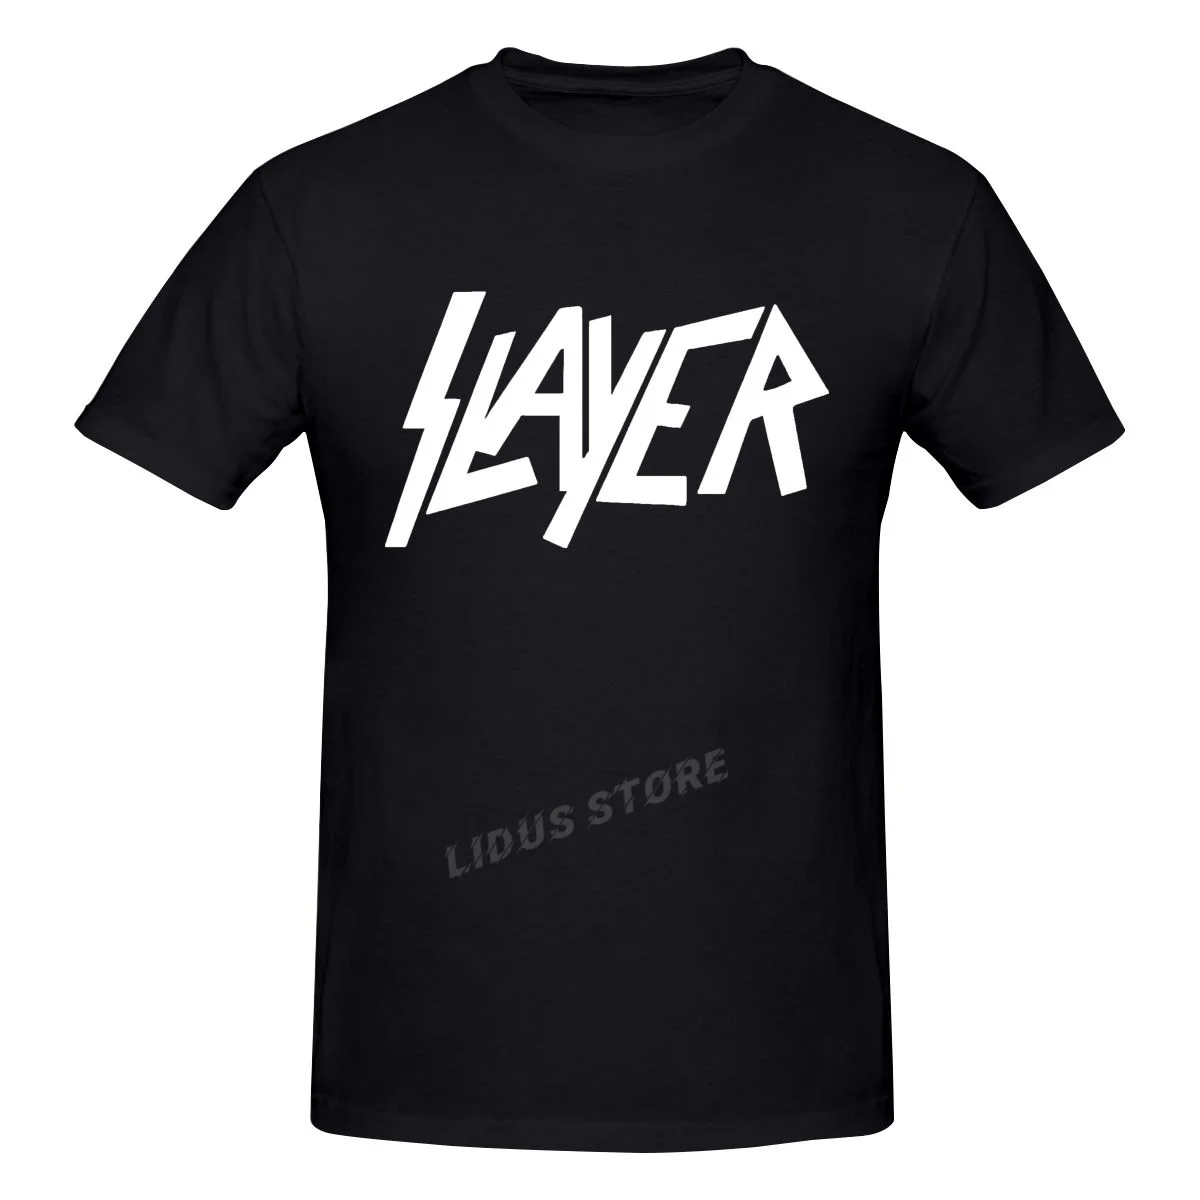 

2022 Fashion Leisure Metal Band Slayer T-shirt Harajuku Streetwear 100% Cotton Graphics Tshirt Brands Tee Tops